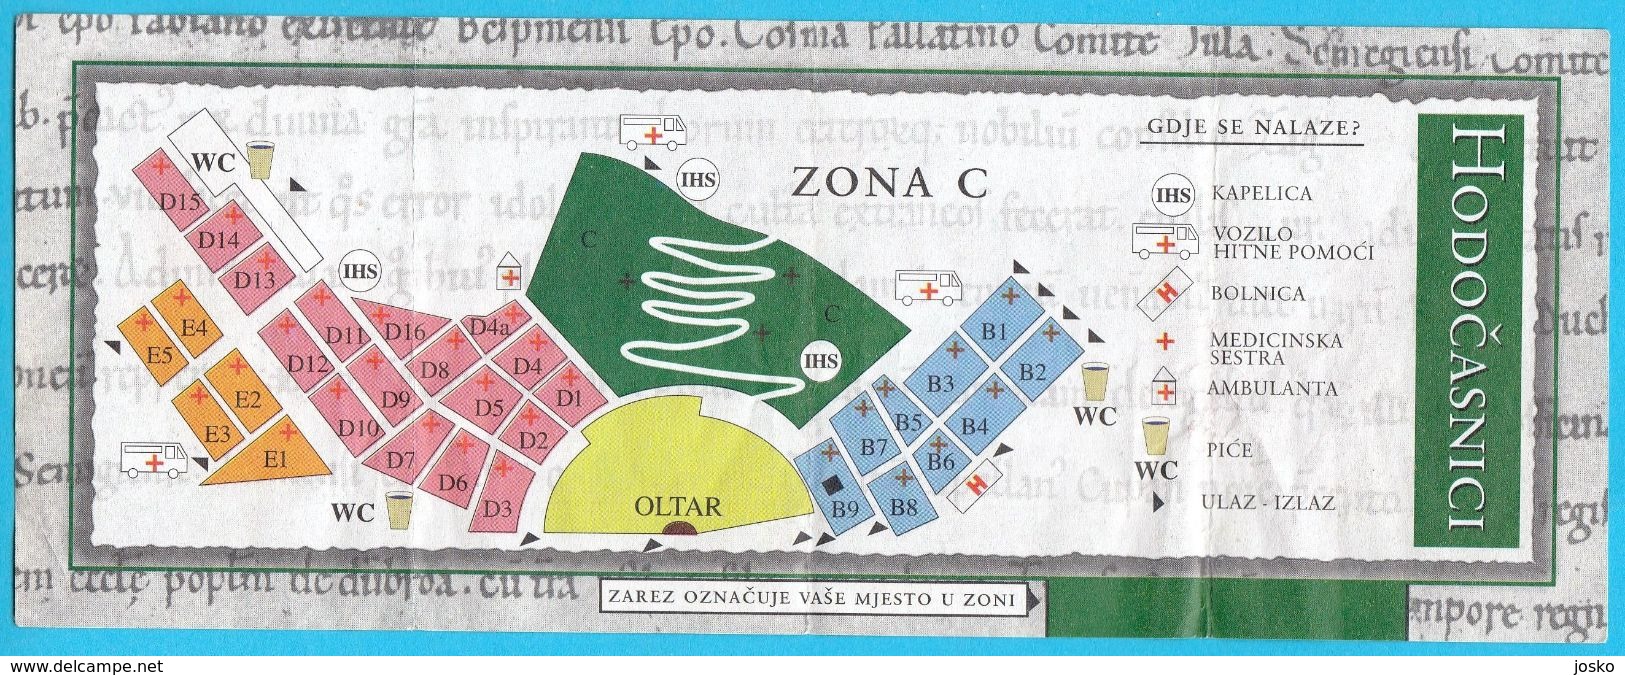 POPE JOHN PAUL II Visit Croatiia (1998.) - Official Ticket * Karol Wojtyla * Billet Biglietto Pape Papst Papa Paus - Programas